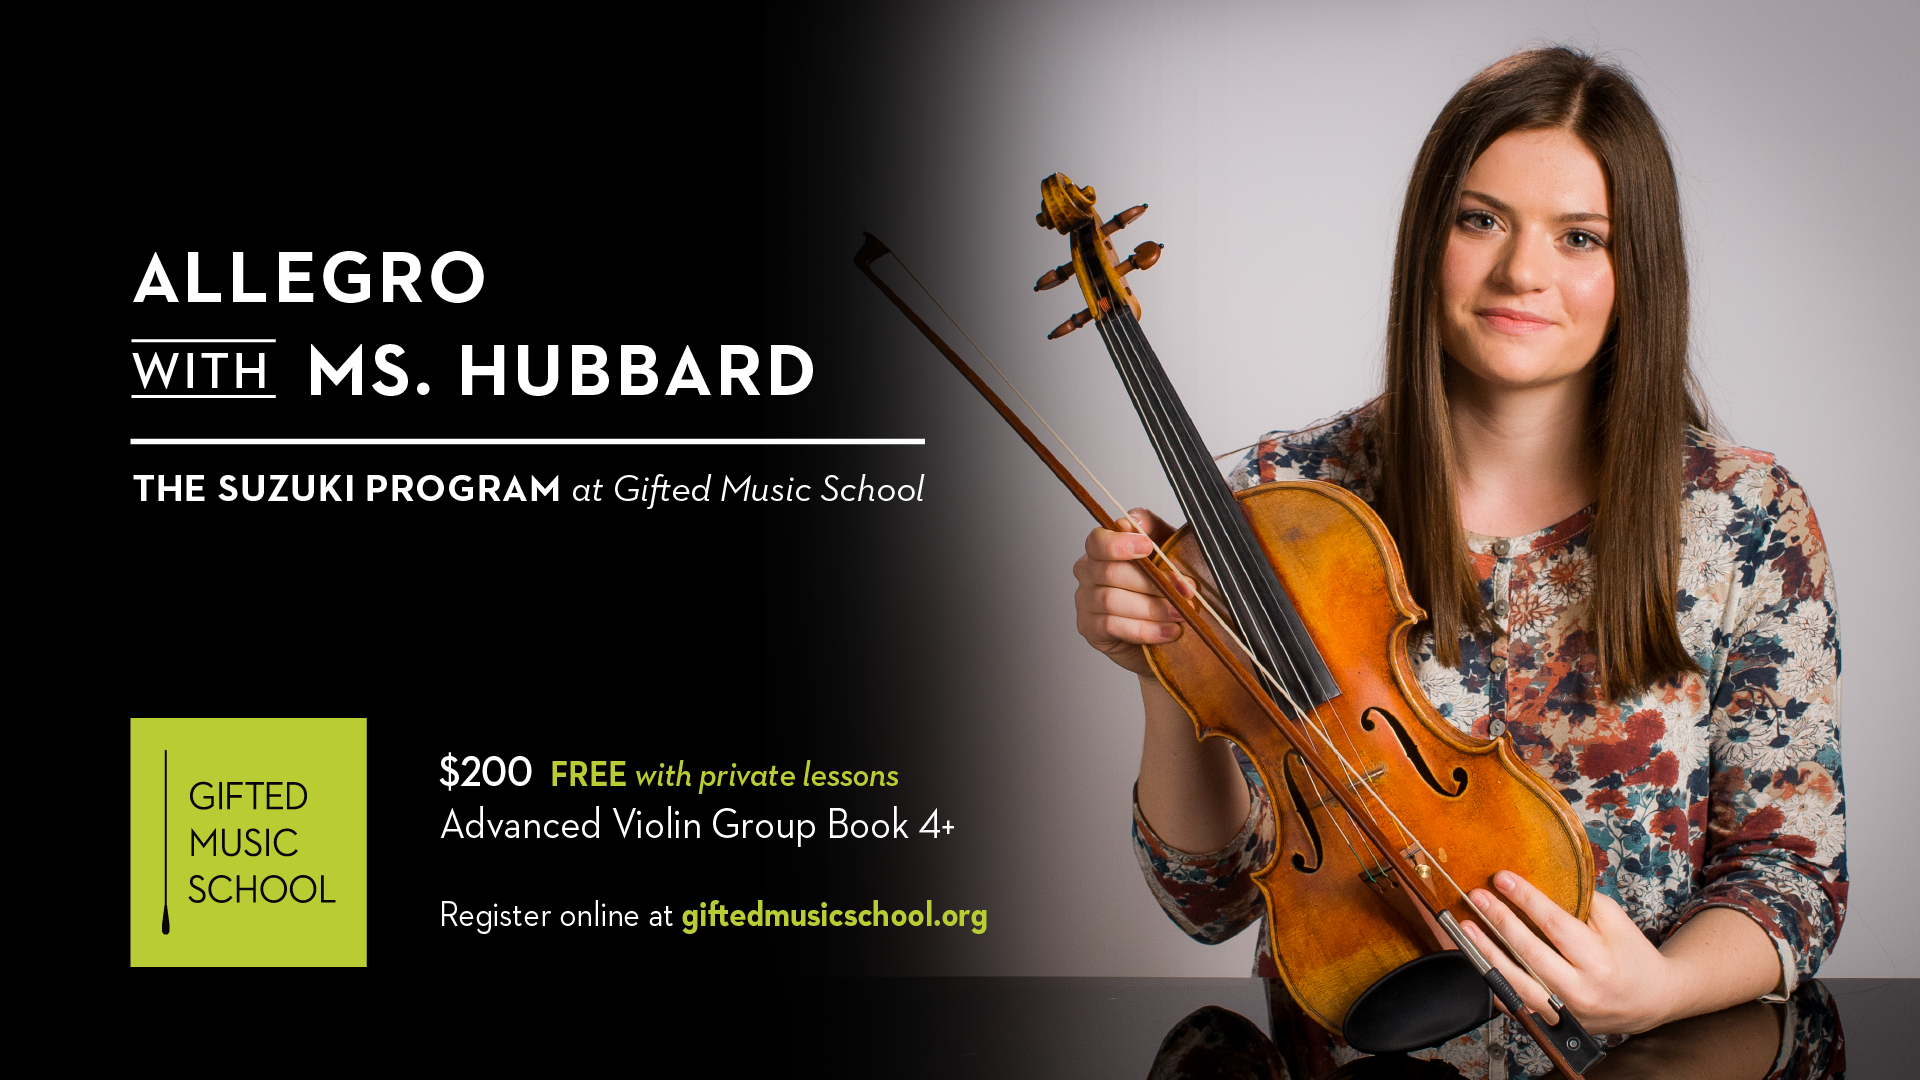 Gifted Music School Allegro Suzuki Violin Group Class Advertisement with Erika Hubbard holding Violin